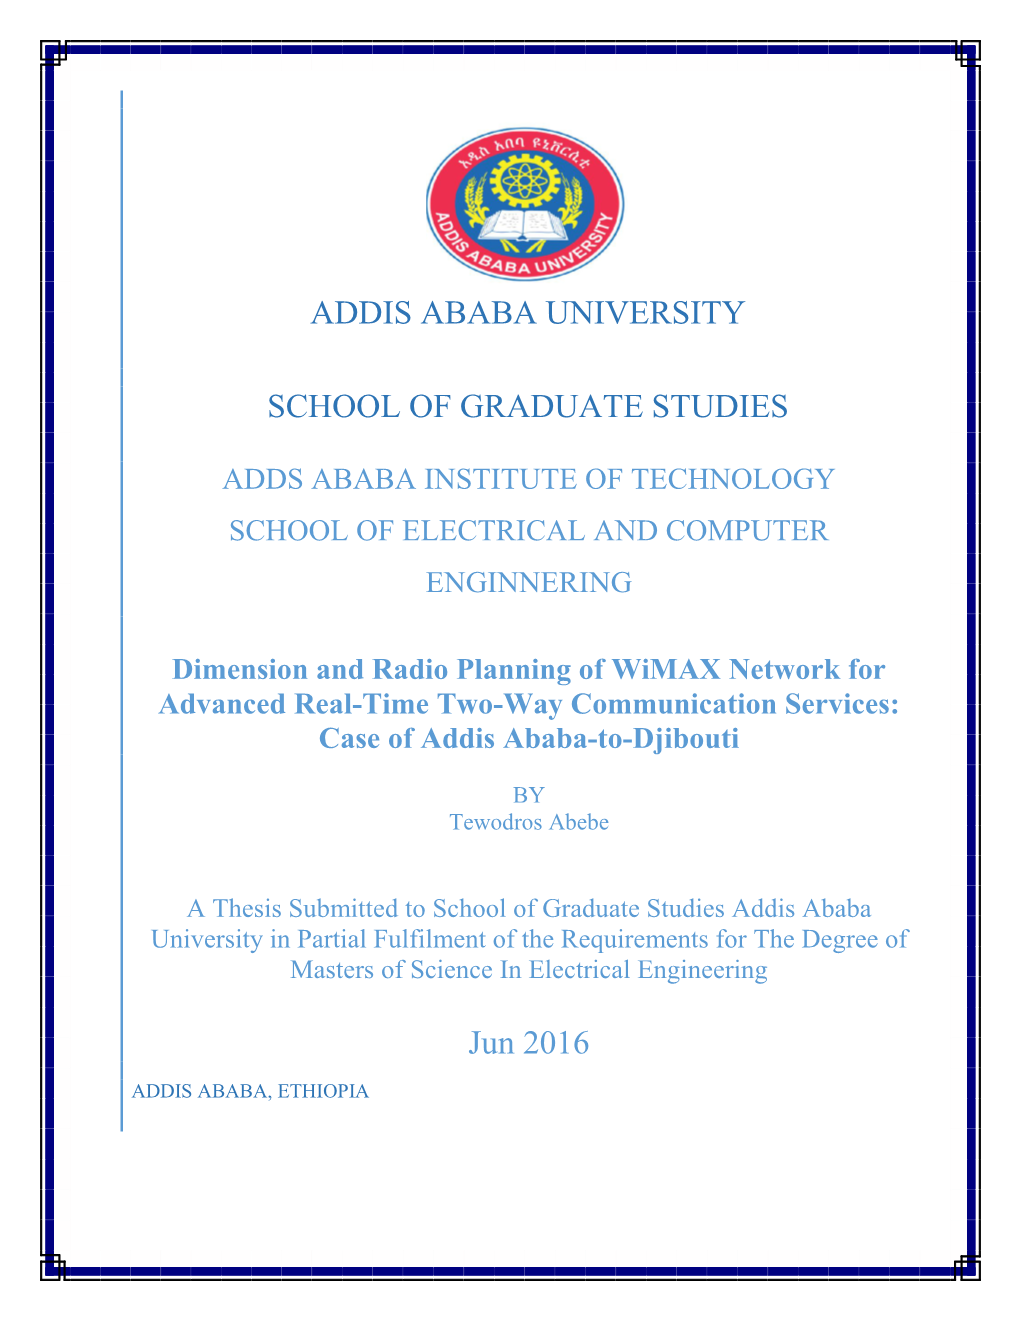 ADDIS ABABA UNIVERSITY SCHOOL of GRADUATE STUDIES Jun 2016